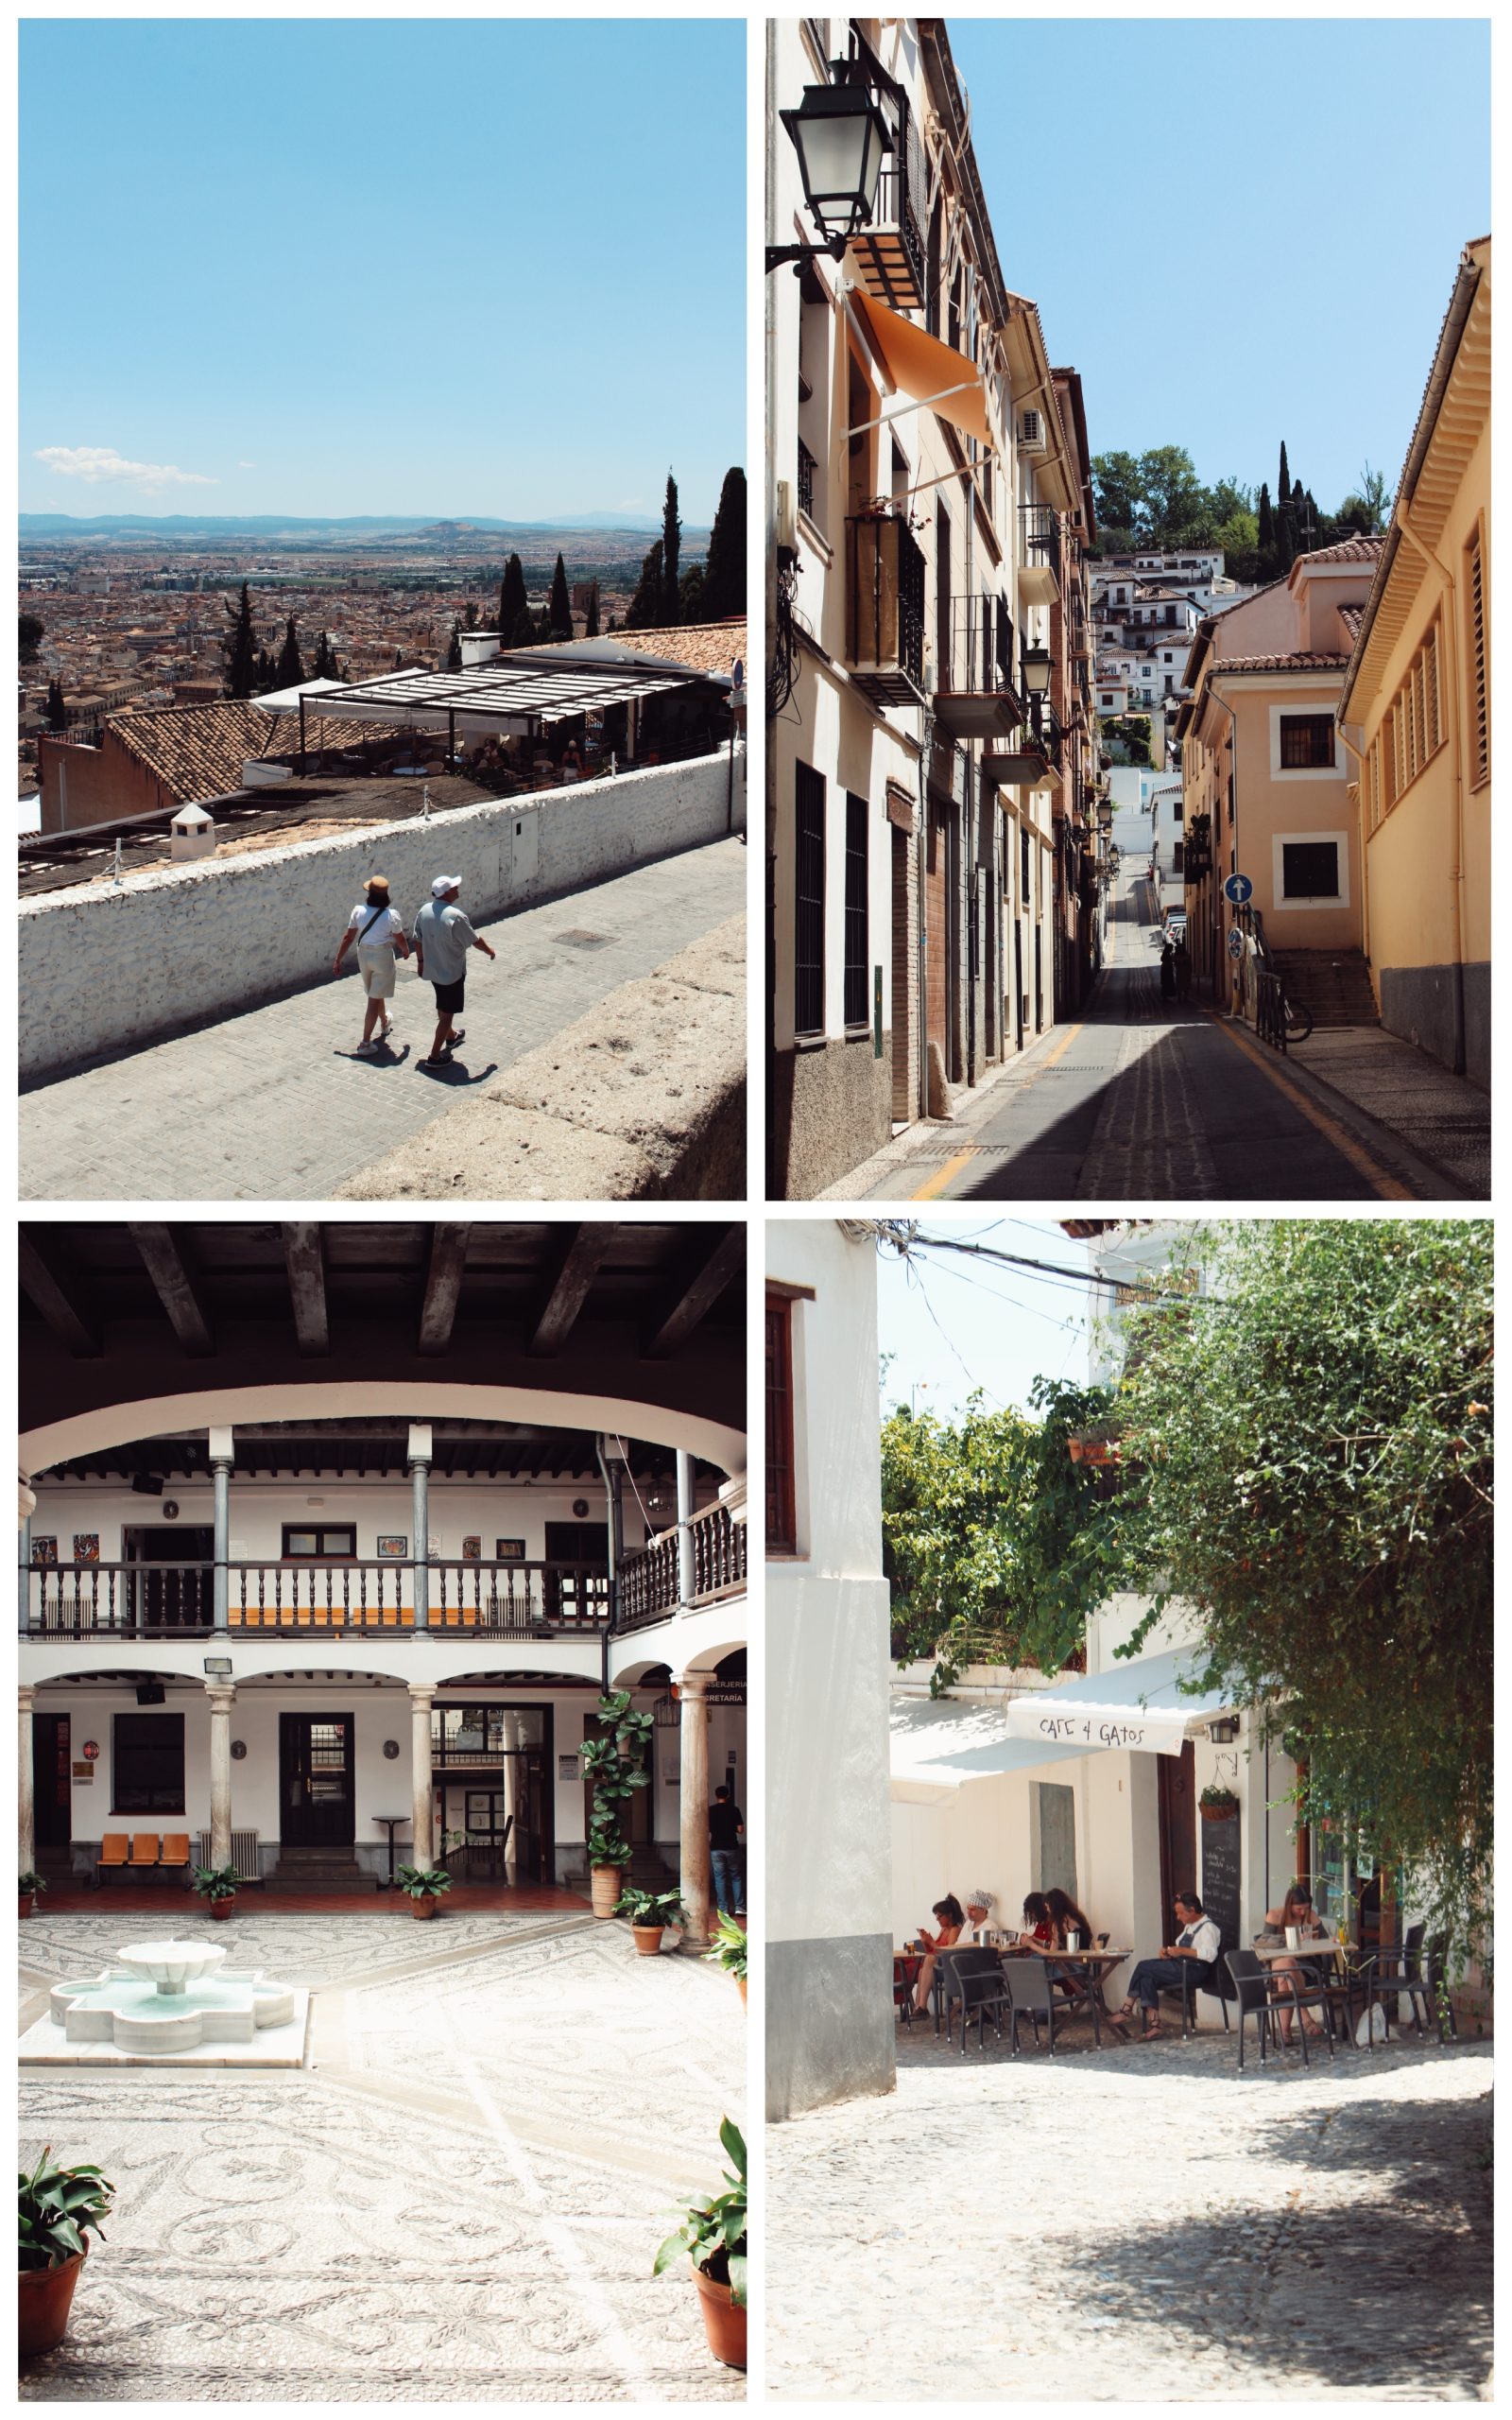 City scenes of Granada